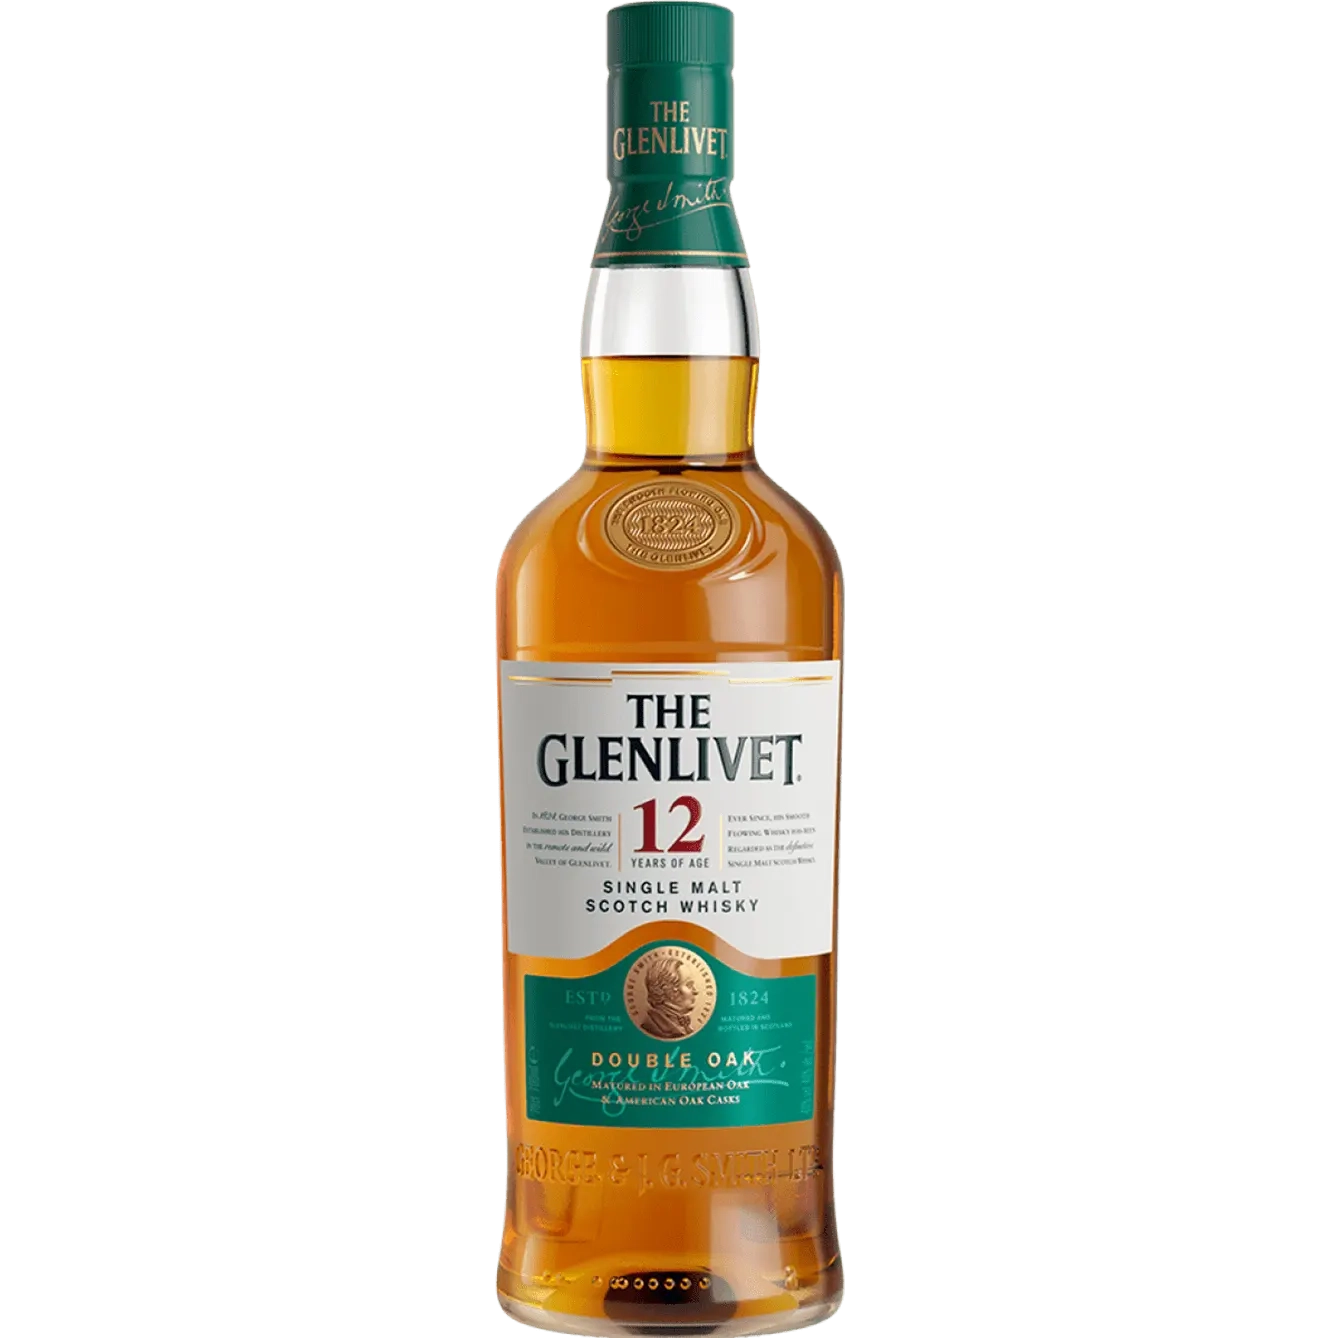 The Glenlivet 12 Year Old - Double Cask - Single Malt Scotch Whisky-Single Malt Scotch Whisky-080432402825-Fountainhall Wines